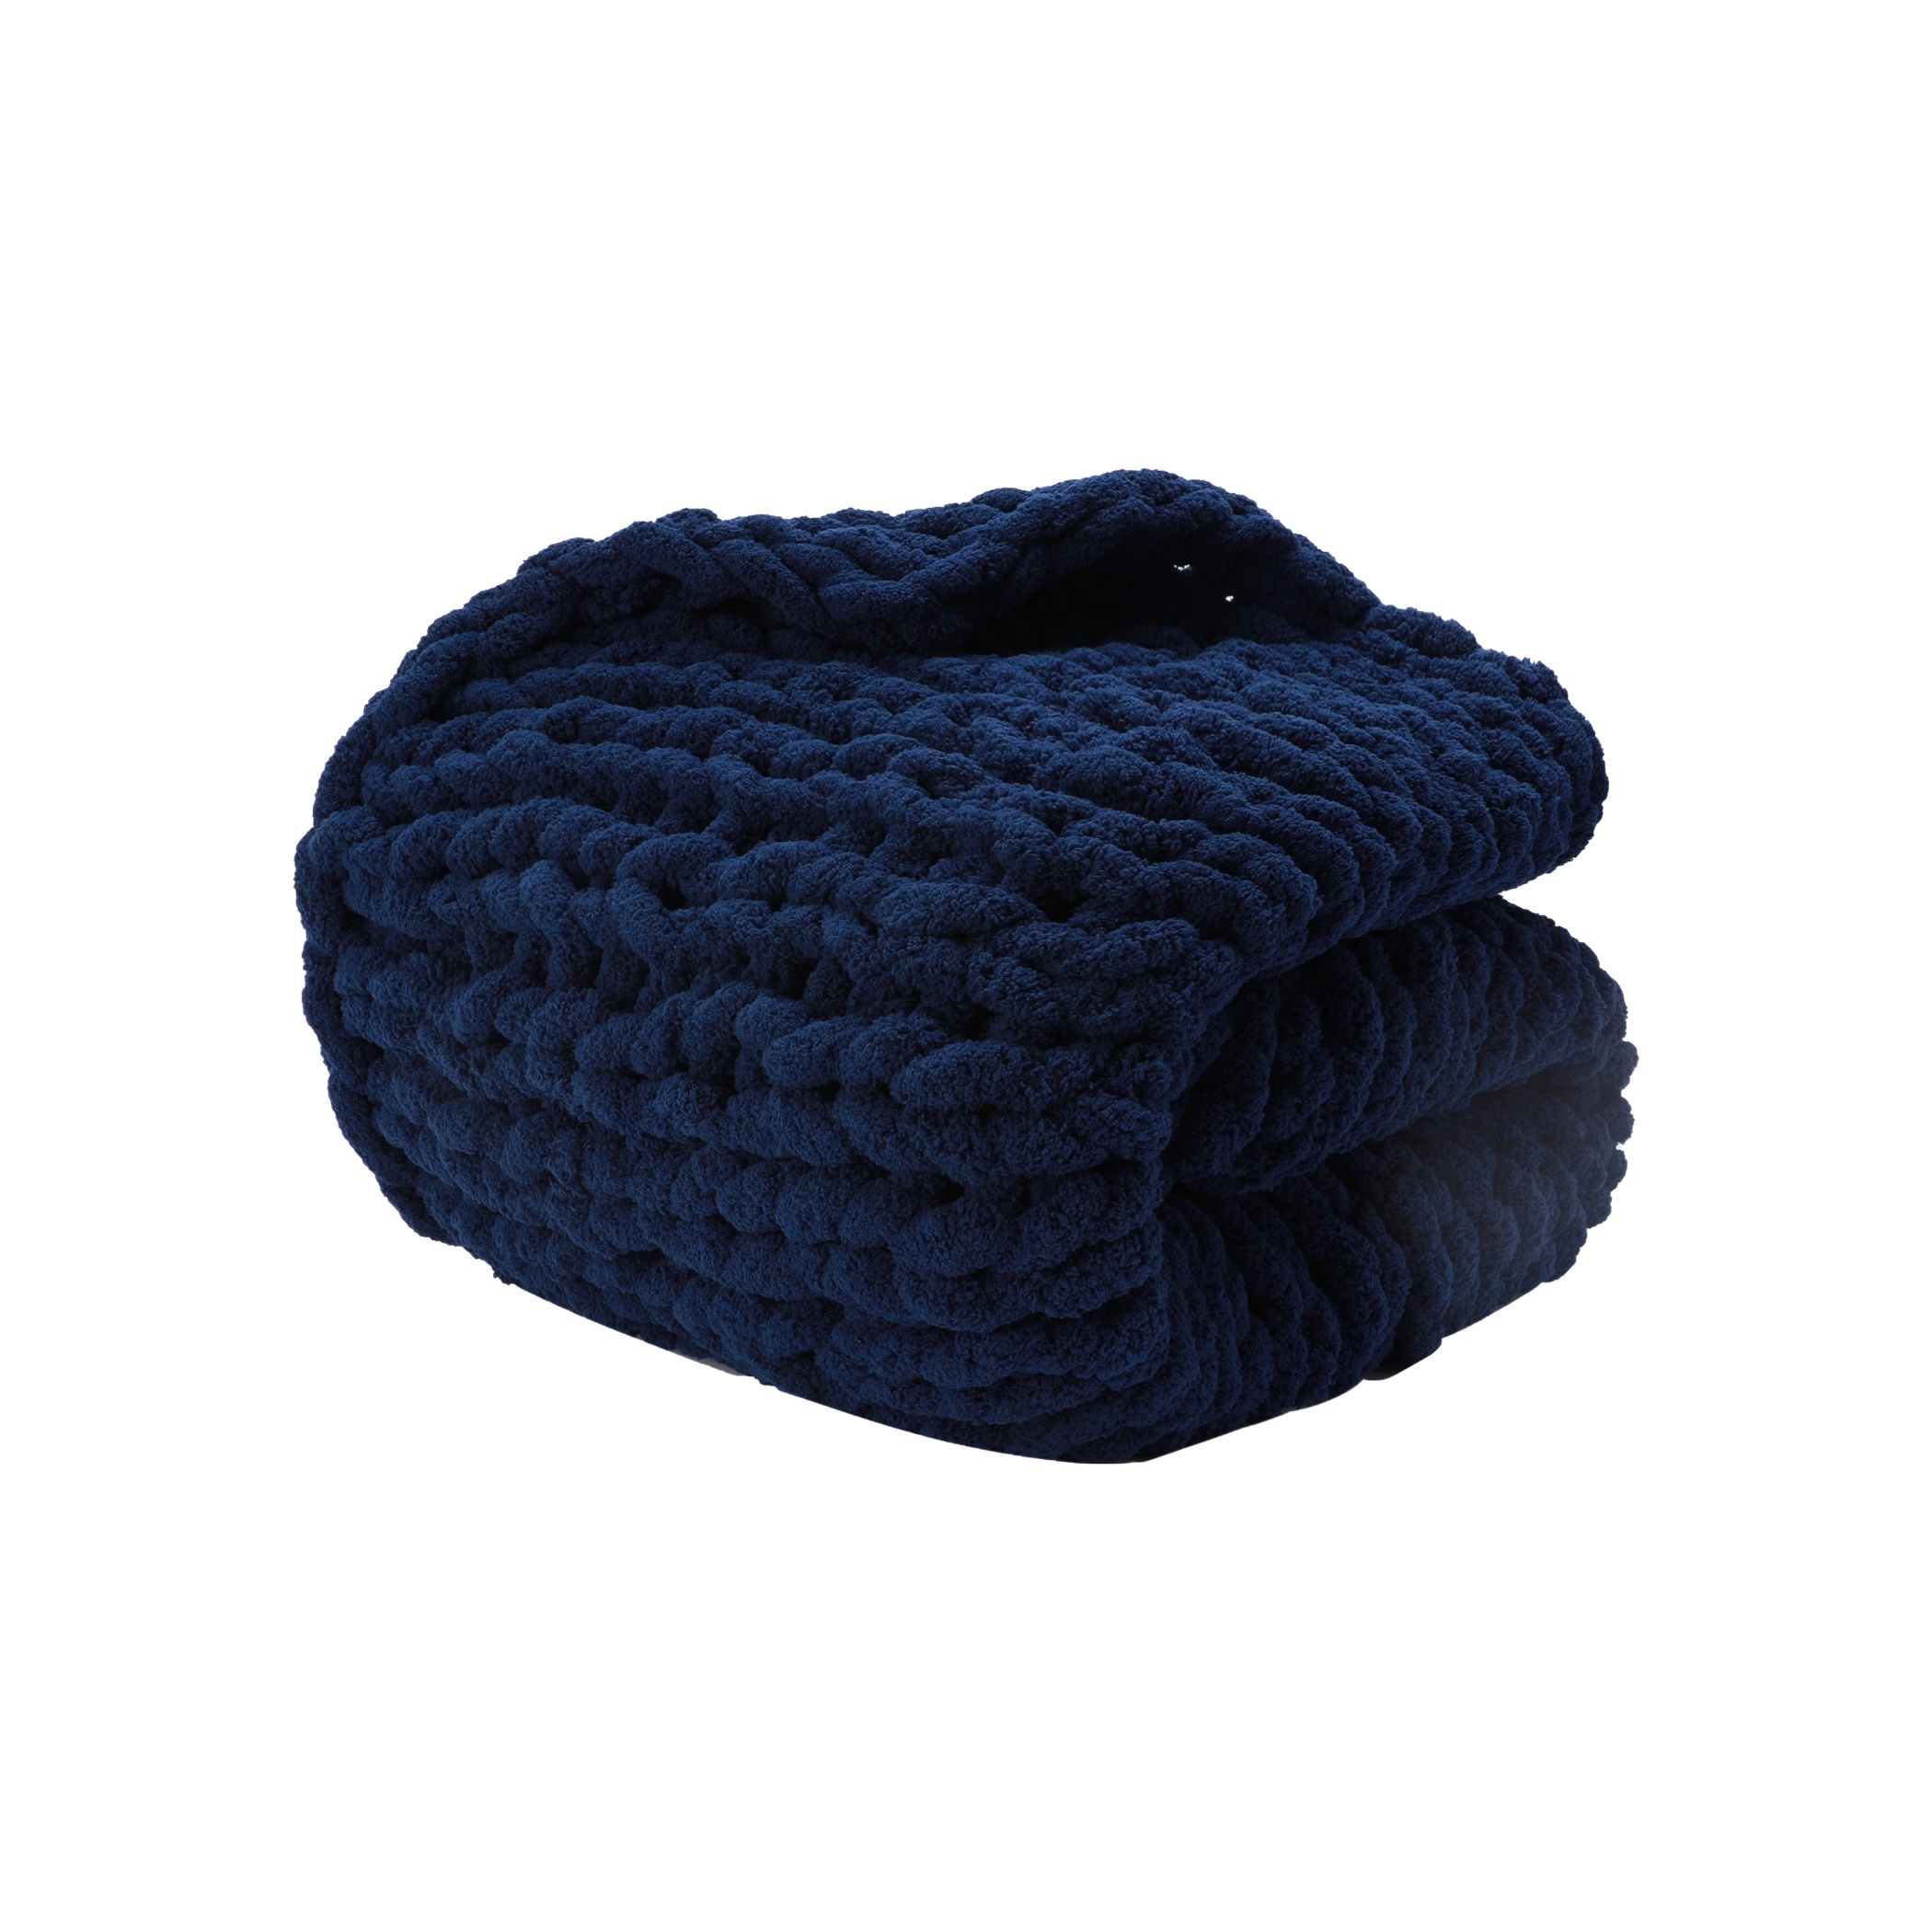  Timgle Chenille Chunky Yarn with 4 Pack 24 Yards Fluffy Jumbo  Thick Fluffy Yarn Knitting Bulky Yarn for Crocheting Hand Knitting Blankets  Winter DIY Craft Supplies(Beige, Gray, Khaki, Black)